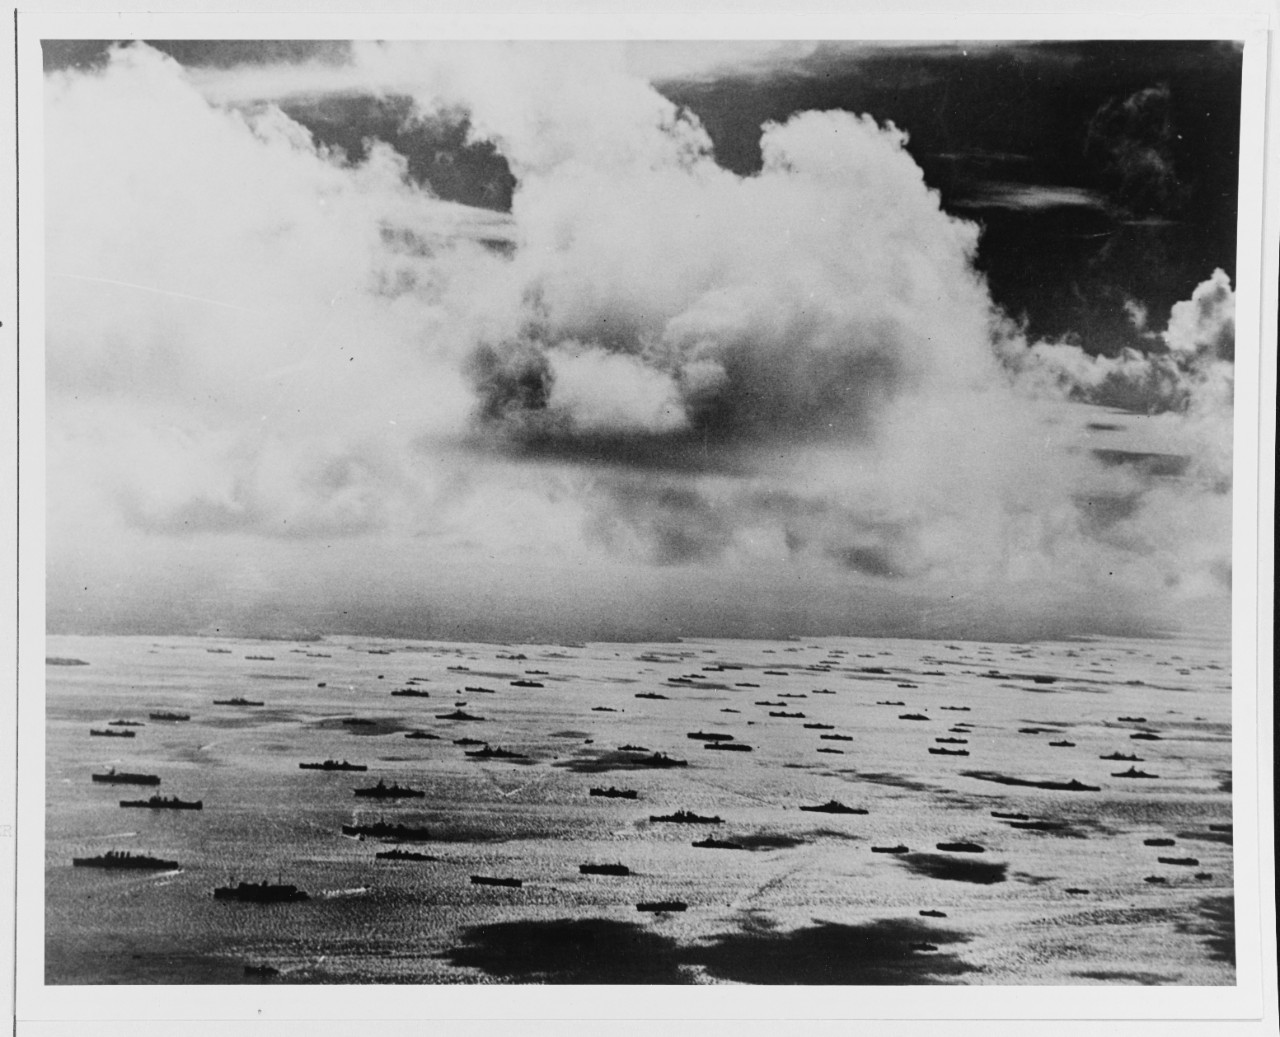 The Leyte Invasion Fleet